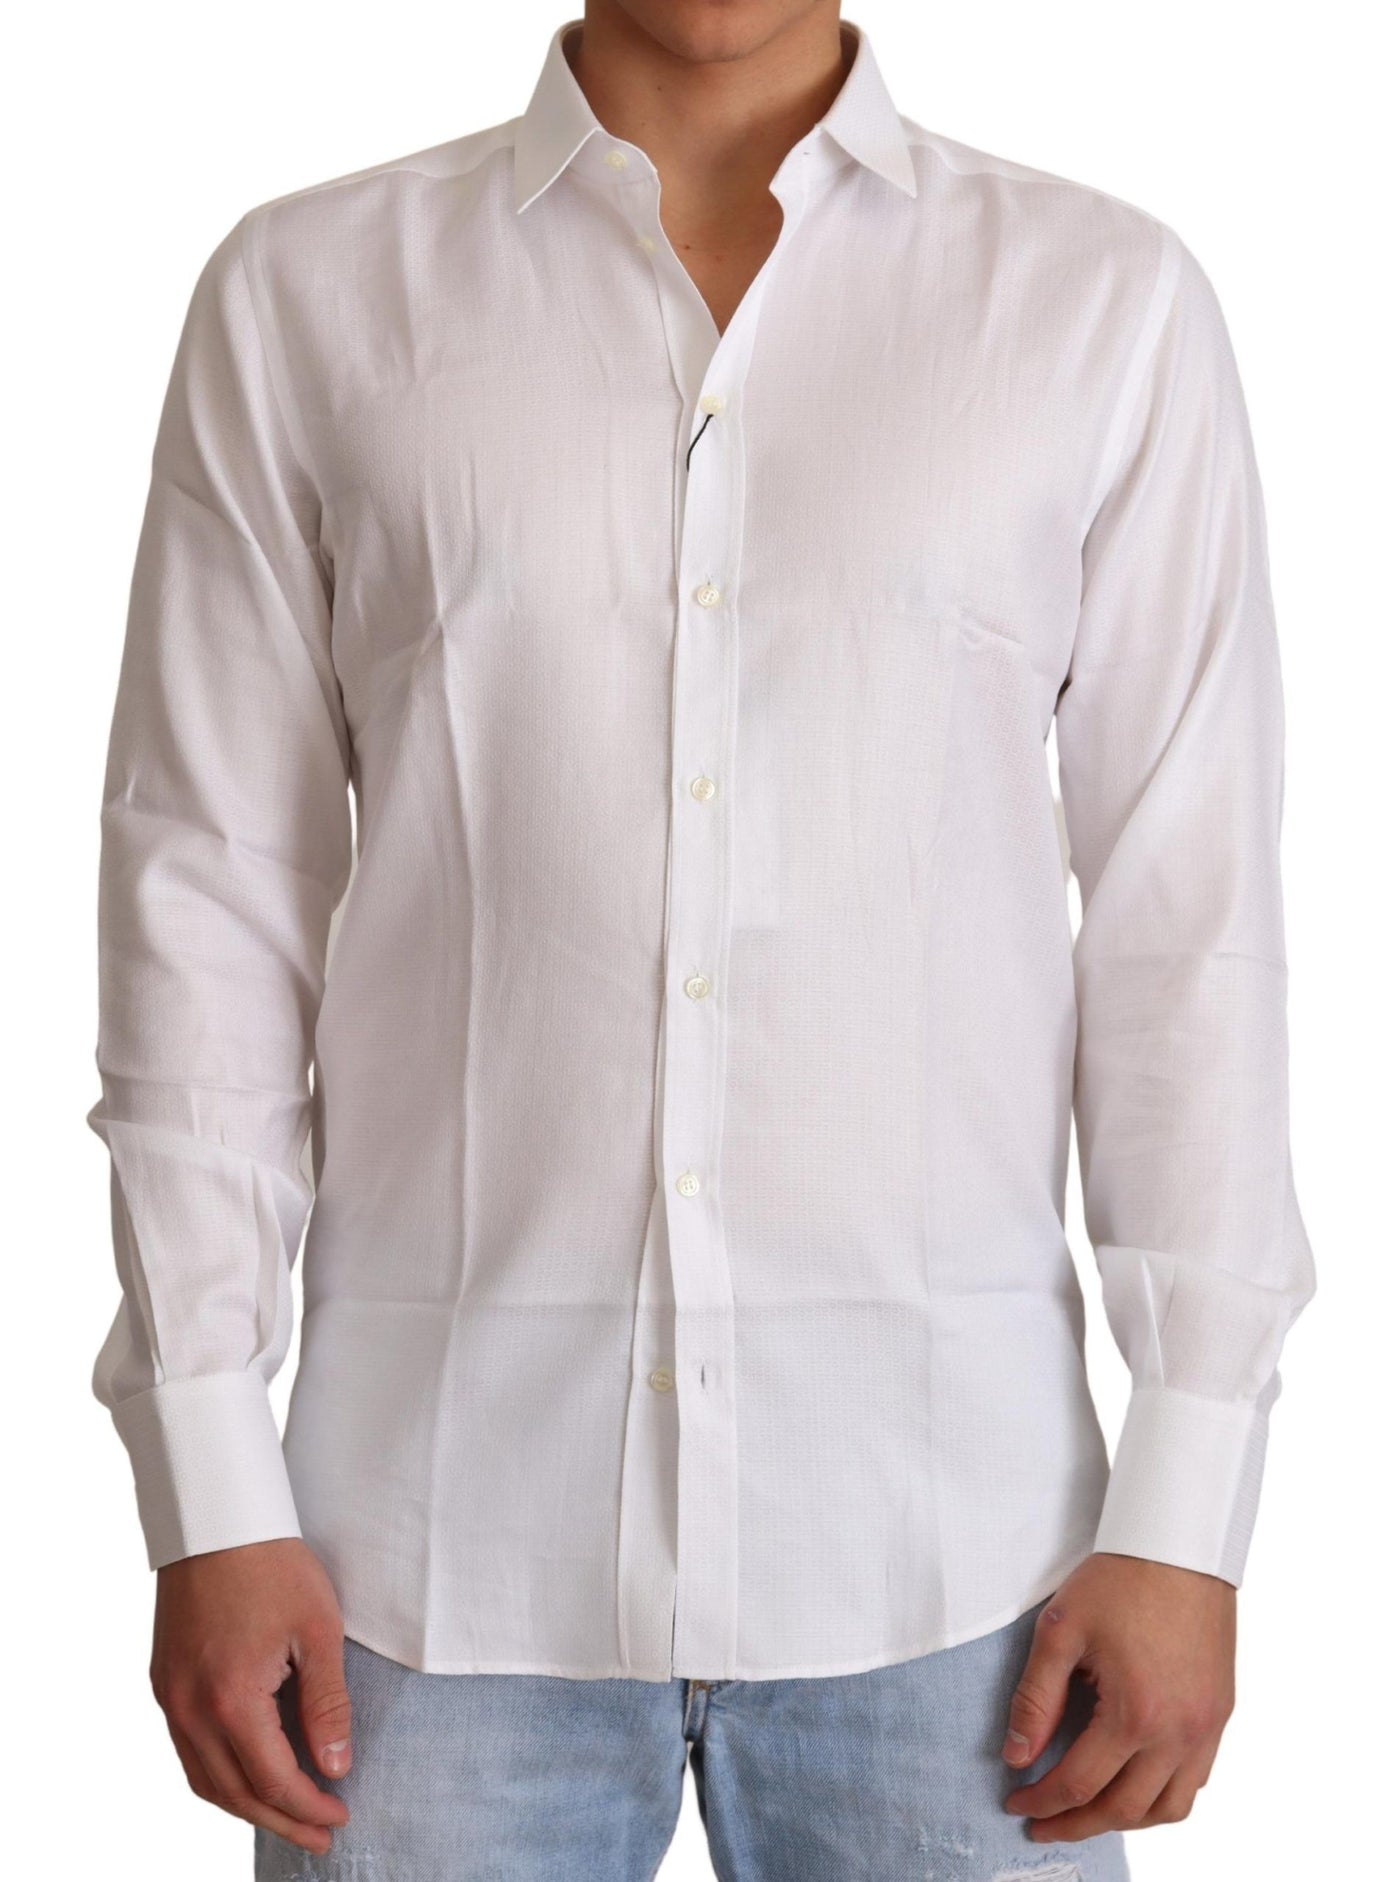 White Cotton Dress Formal Martini Shirt